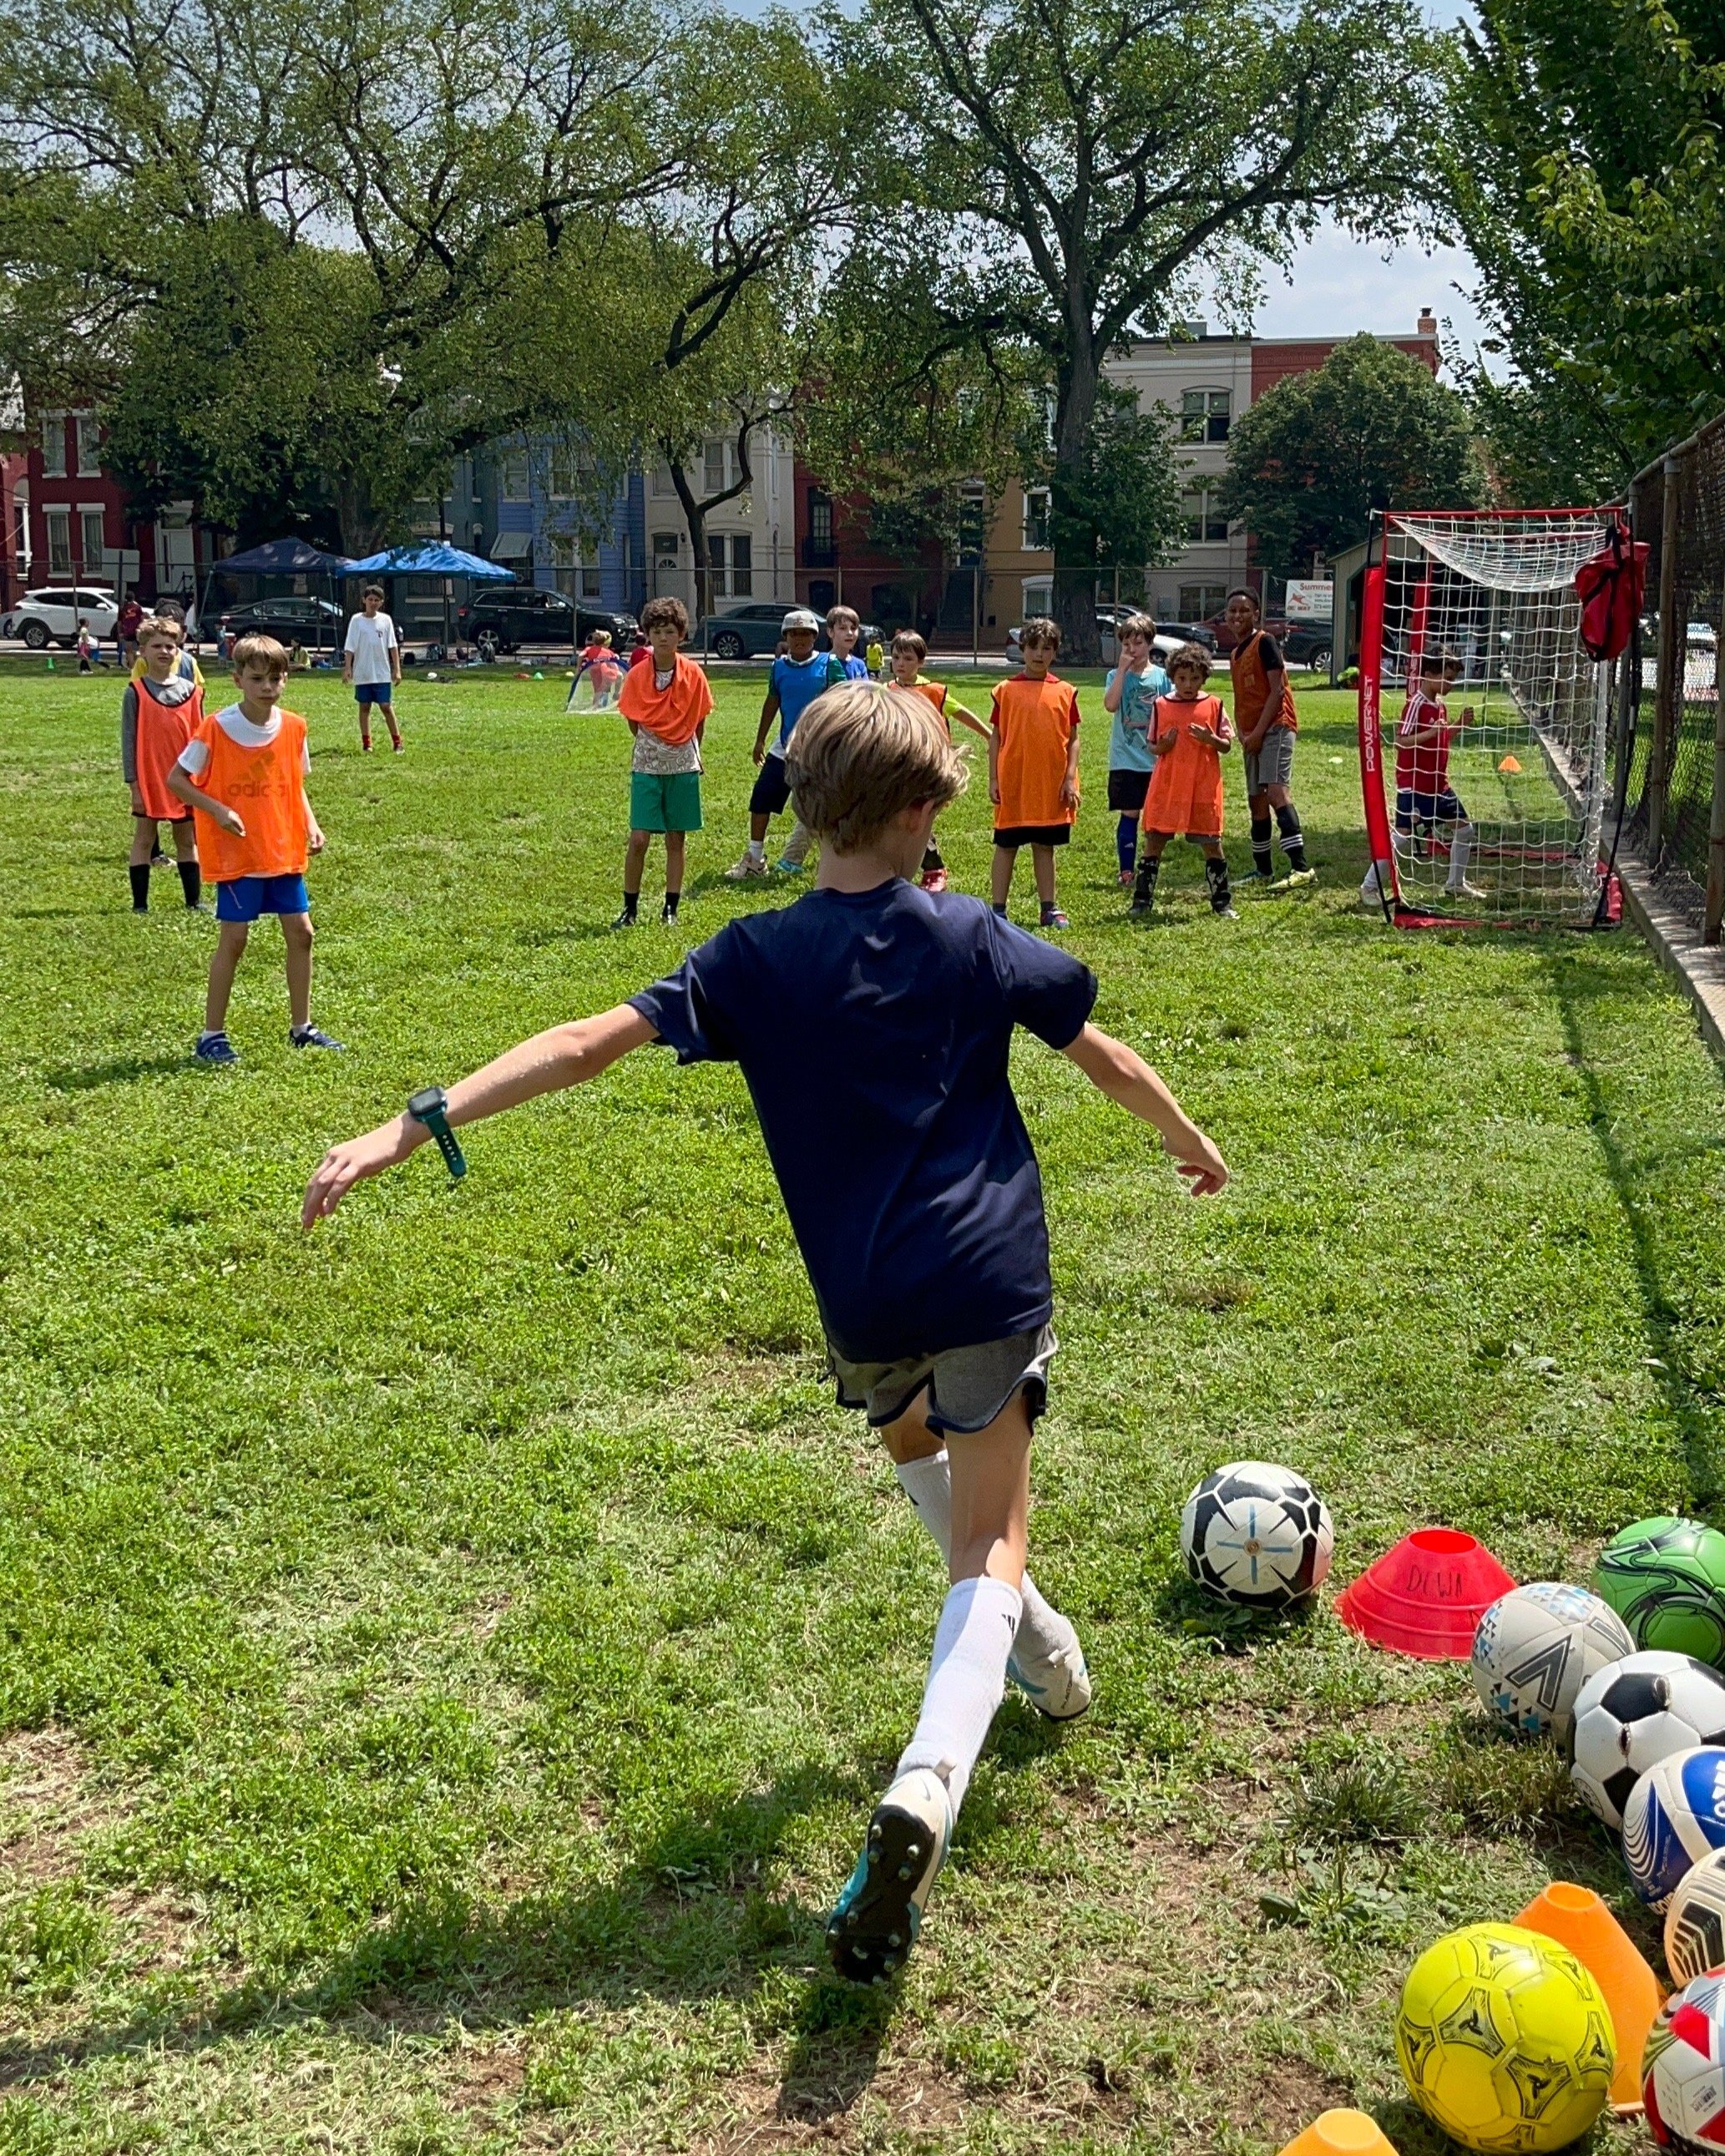 Dc-way-soccer-club-for-kids-in-washington-dc-summer-camp-at-tyler-elementary-school-+00039.jpg